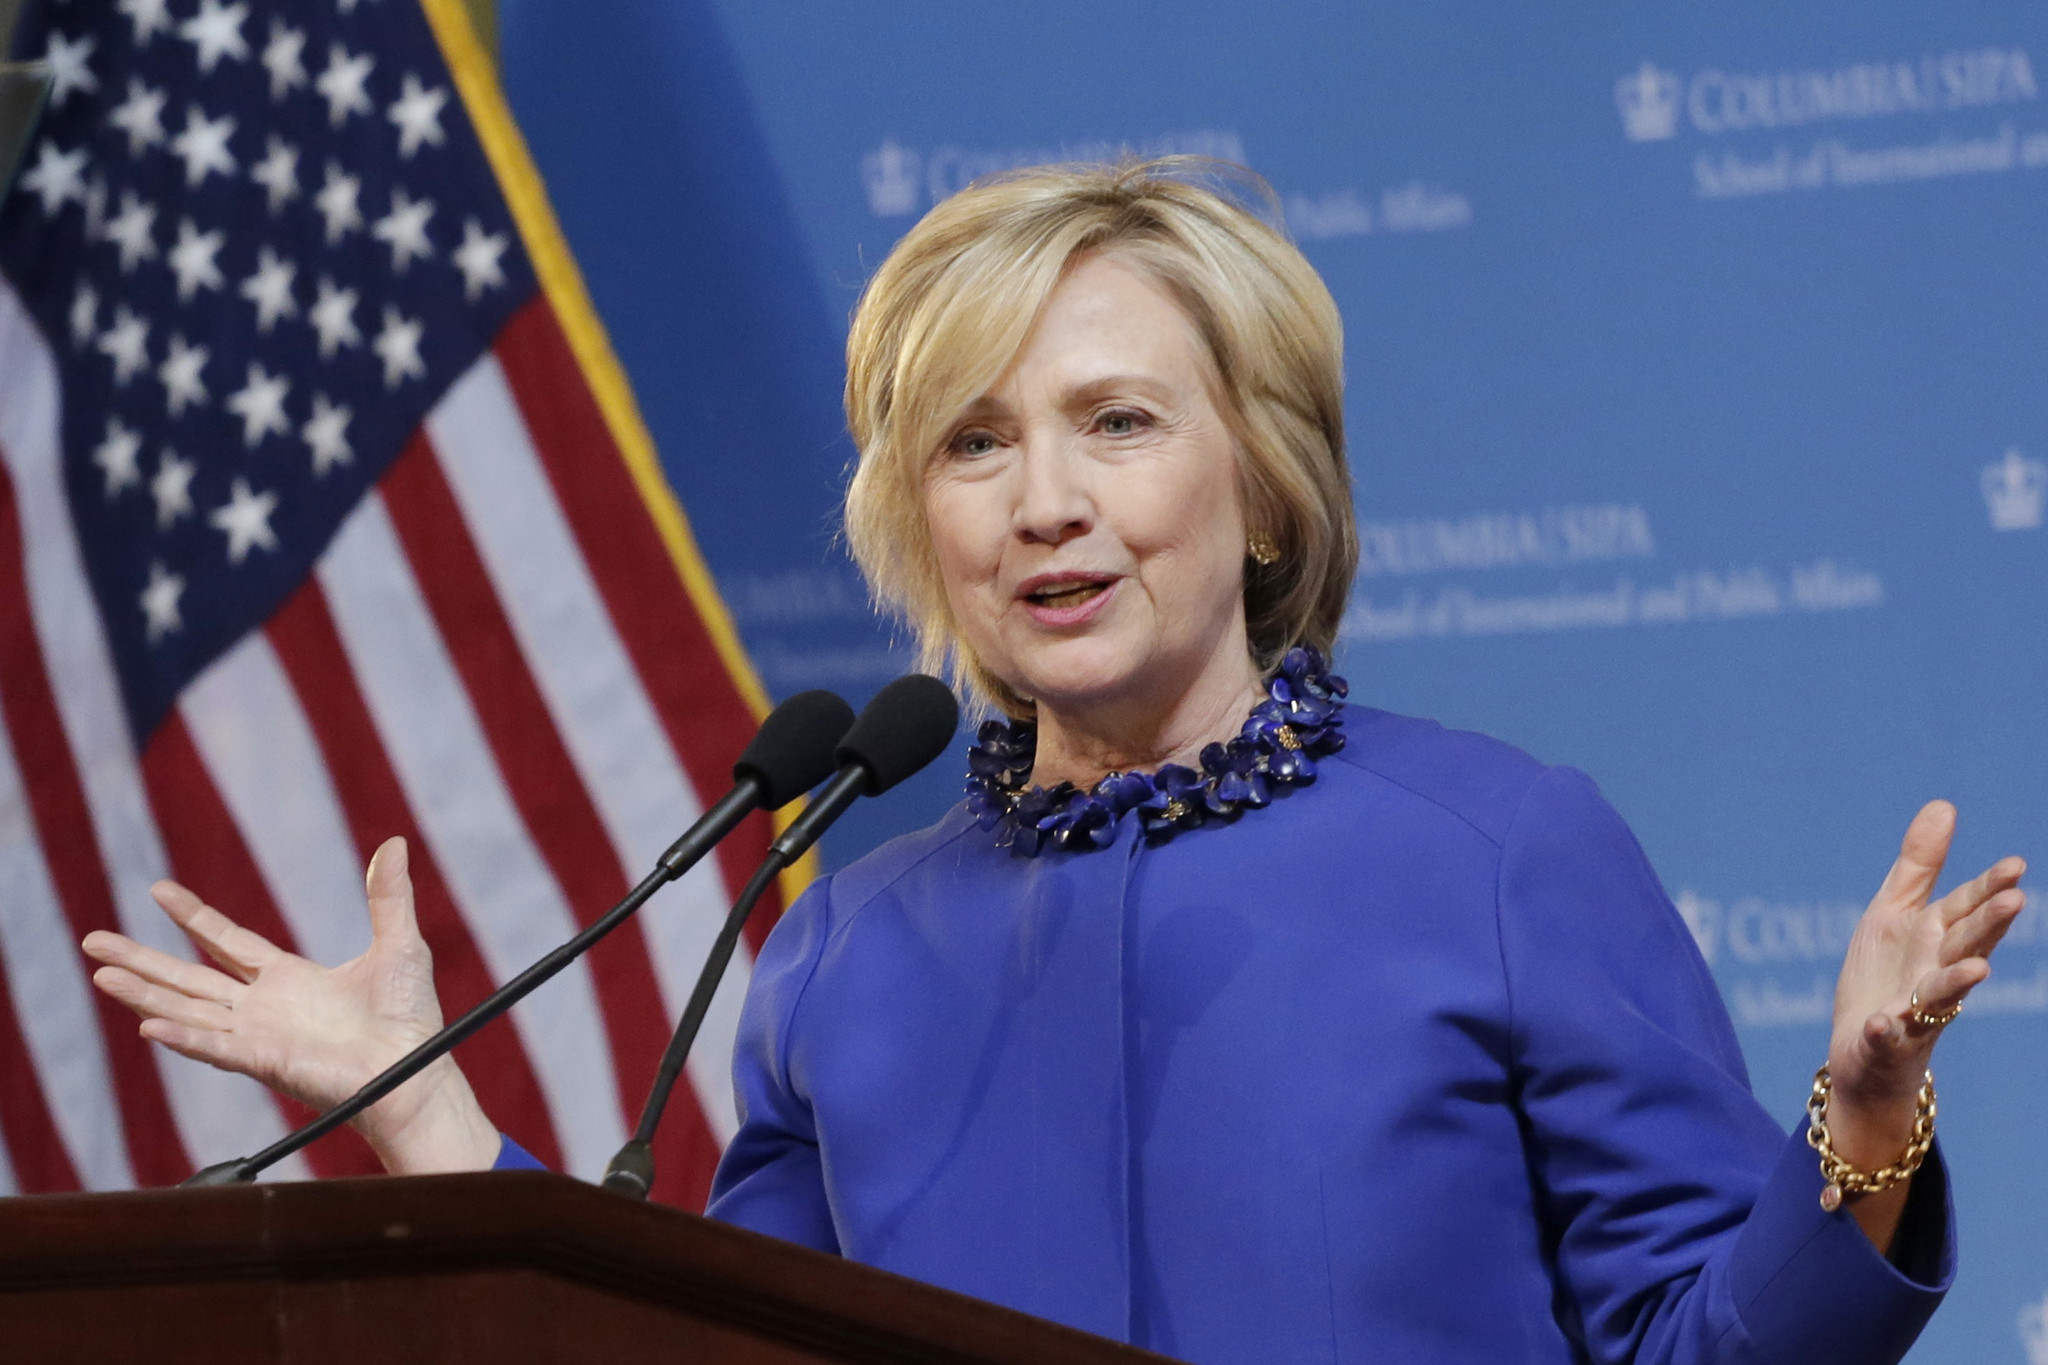 Does the public trust Hillary Clinton? - Sun Sentinel